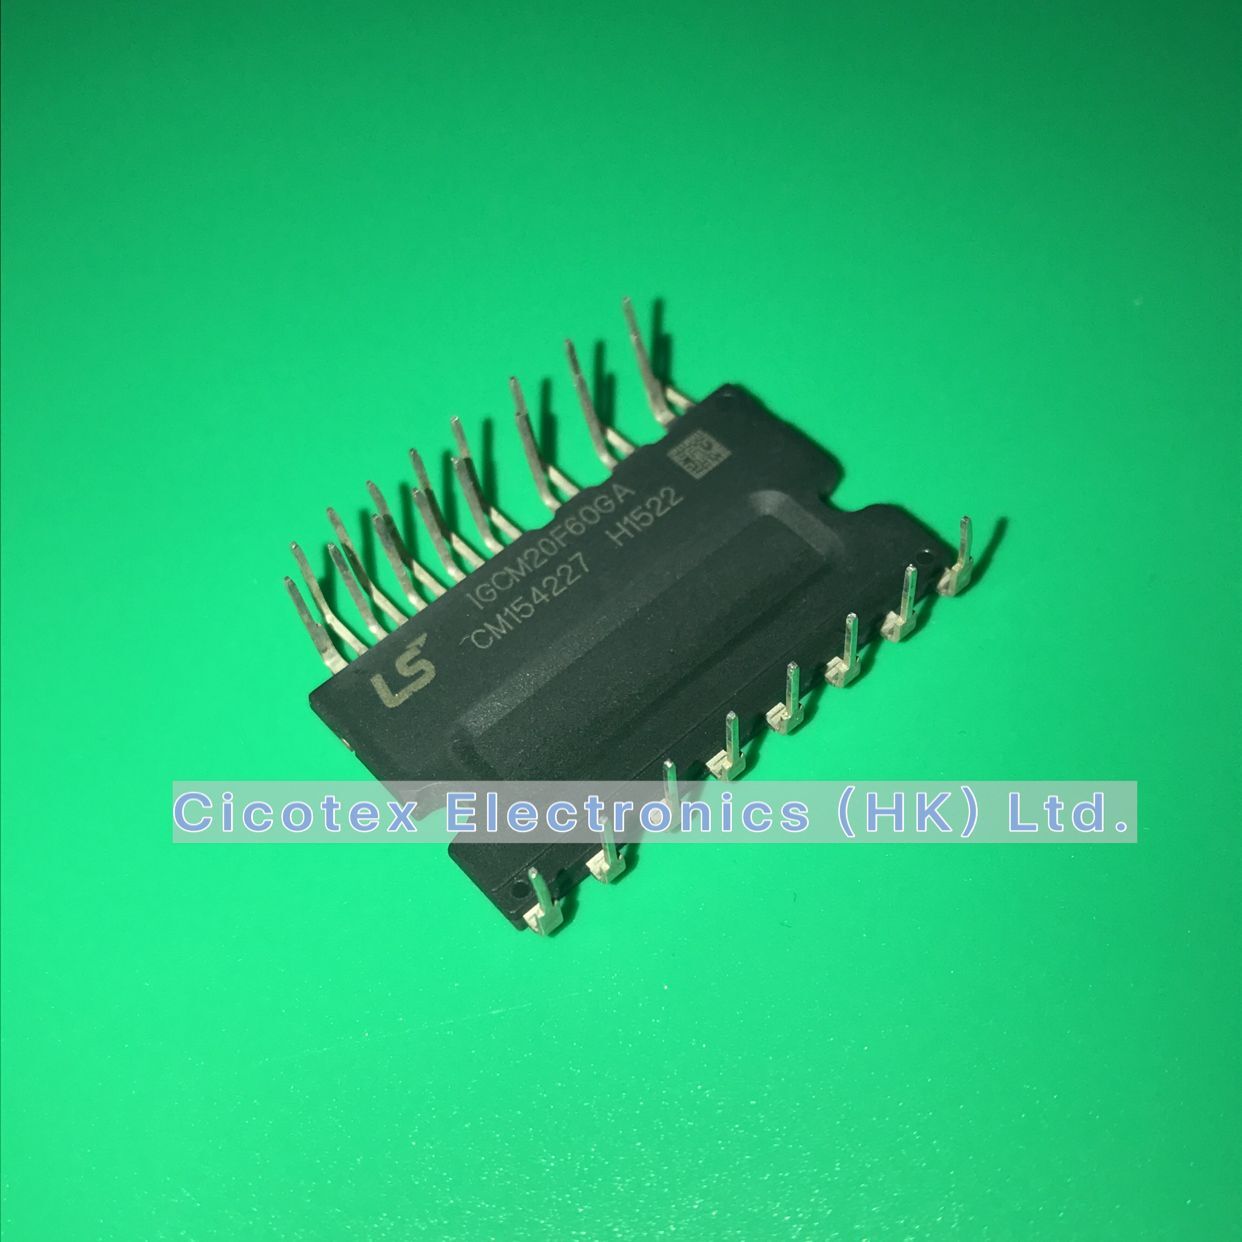 IGCM20F60GA module IGCM 20F60GA IGBT Power Driver Module IGBT 3 Phase 600V 20A 24-PowerDIP Module (1.028", 26.10mm) 24MDIP F60GA